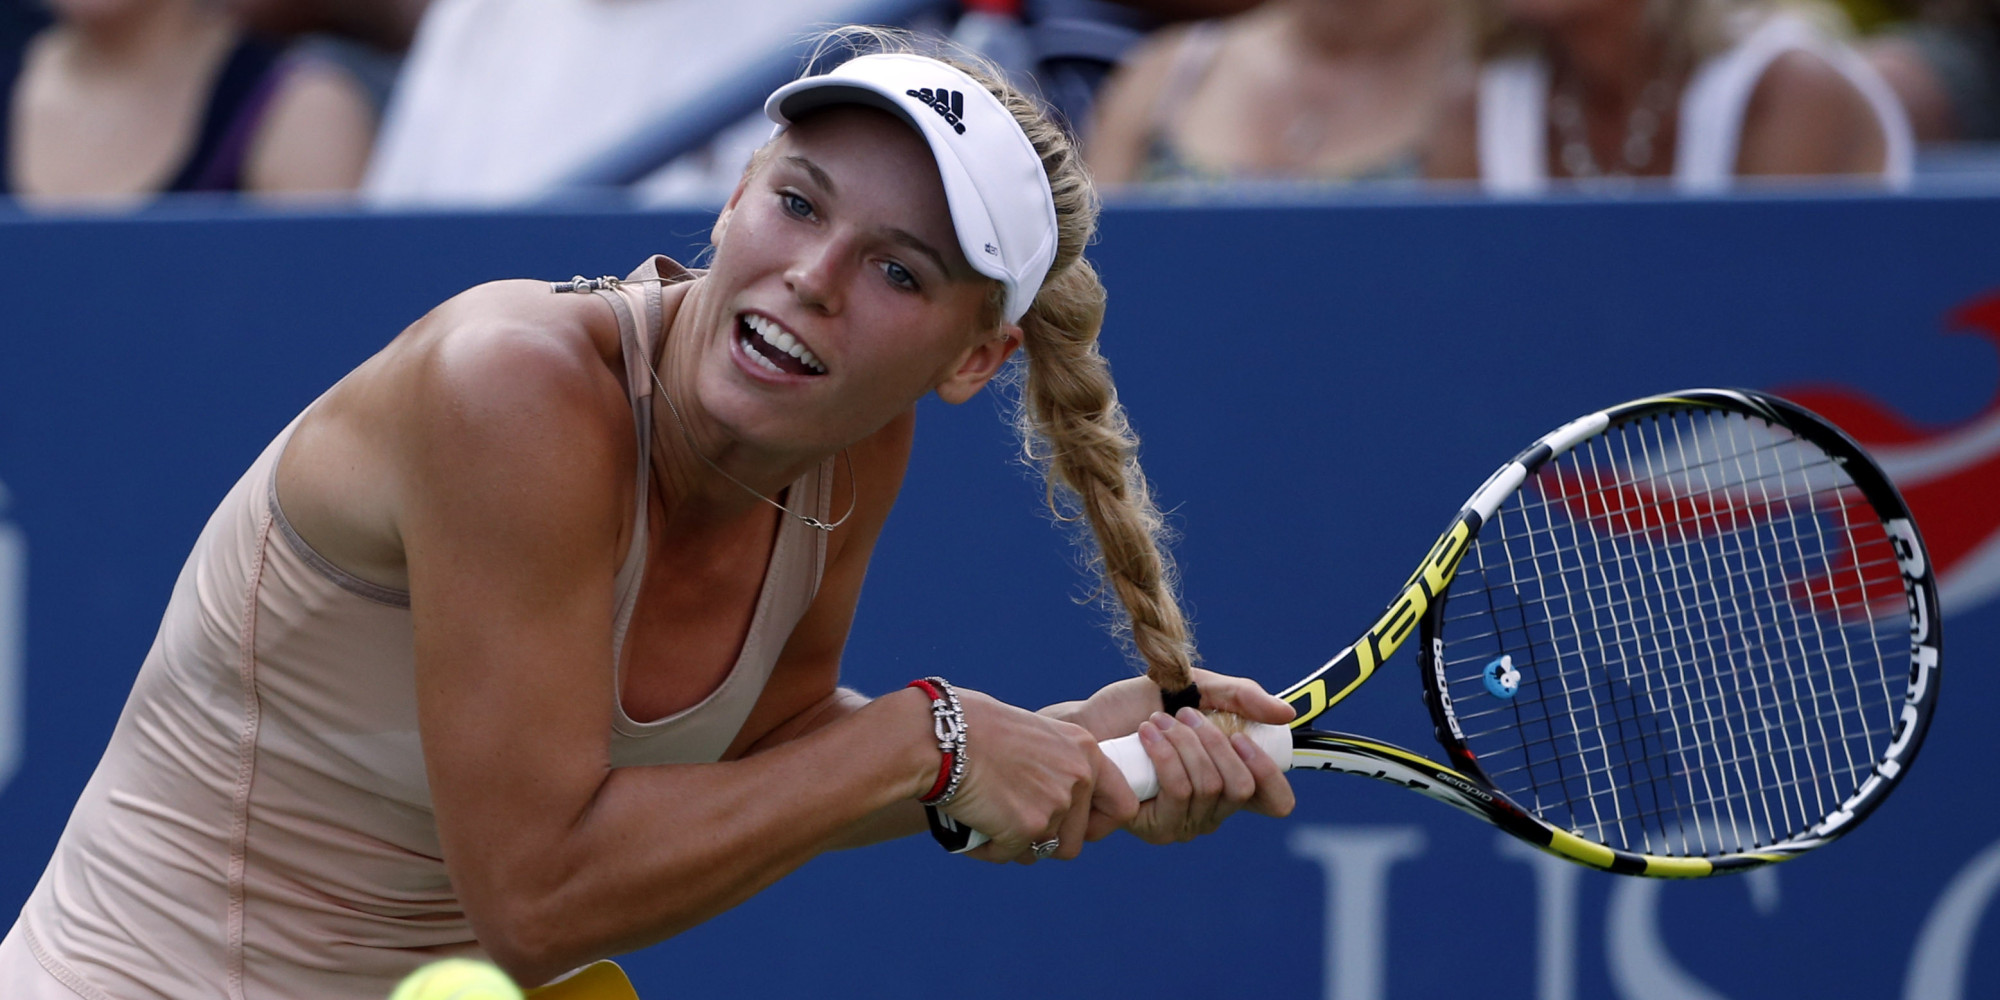 Caroline Wozniacki Gets Hair Caught In Racket At U.S. Open | HuffPost